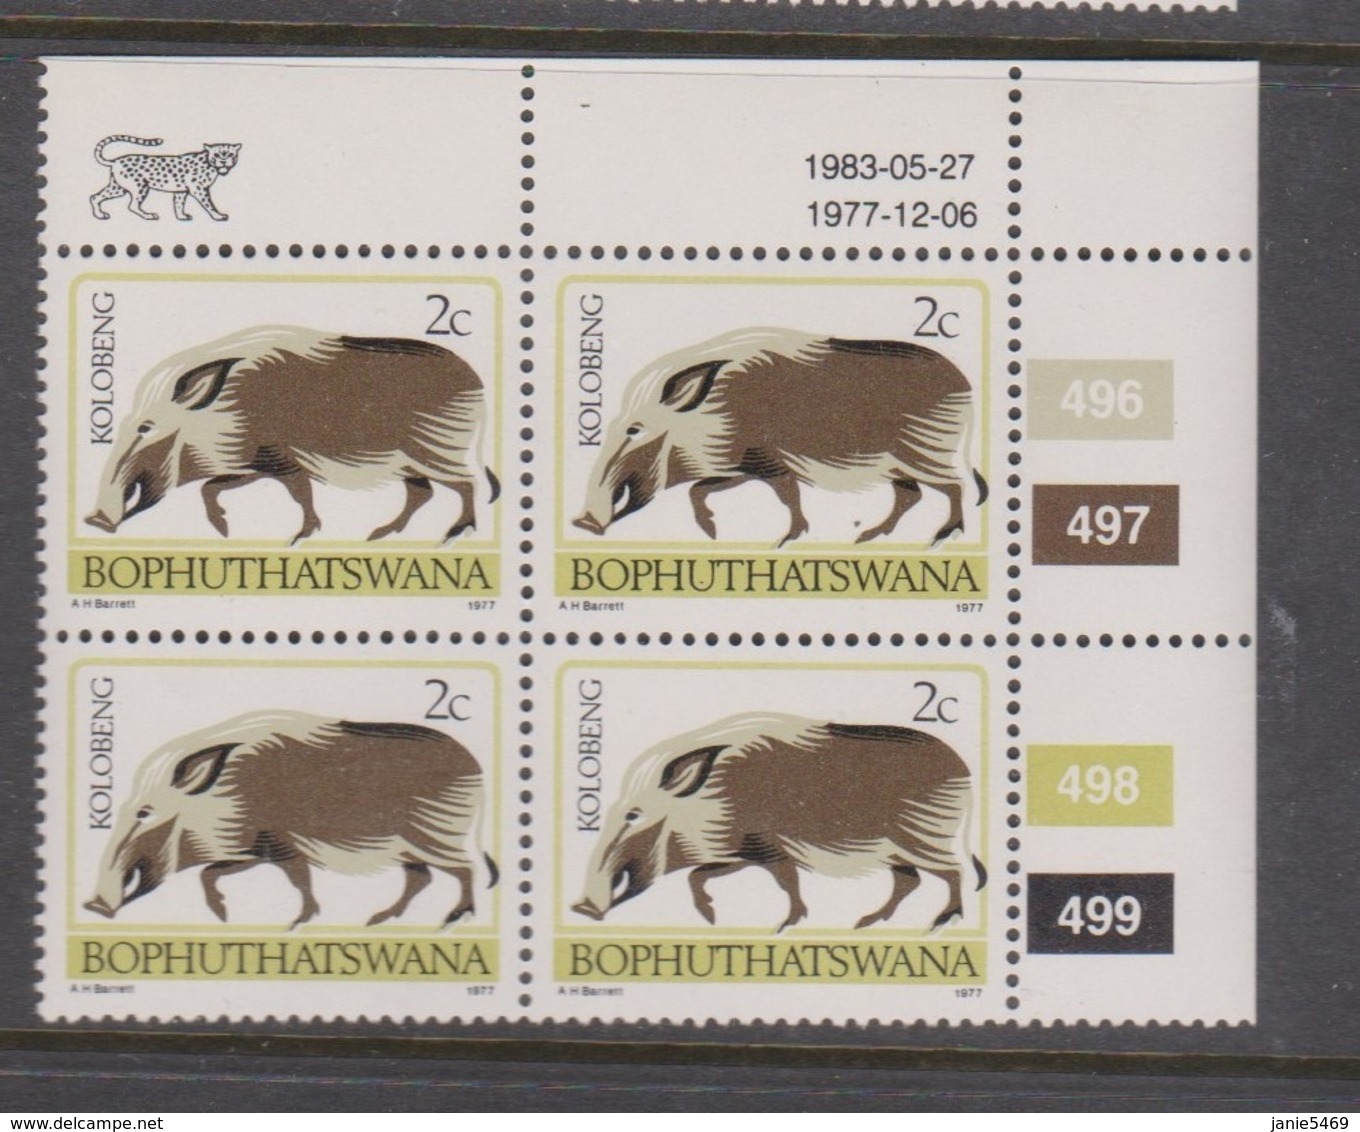 South Africa-Bophuthatswana SG R6a 1983 Tribal Totems,2c Bush Pig,Block 4 Reprint ,Mint Never Hinged - Bophuthatswana